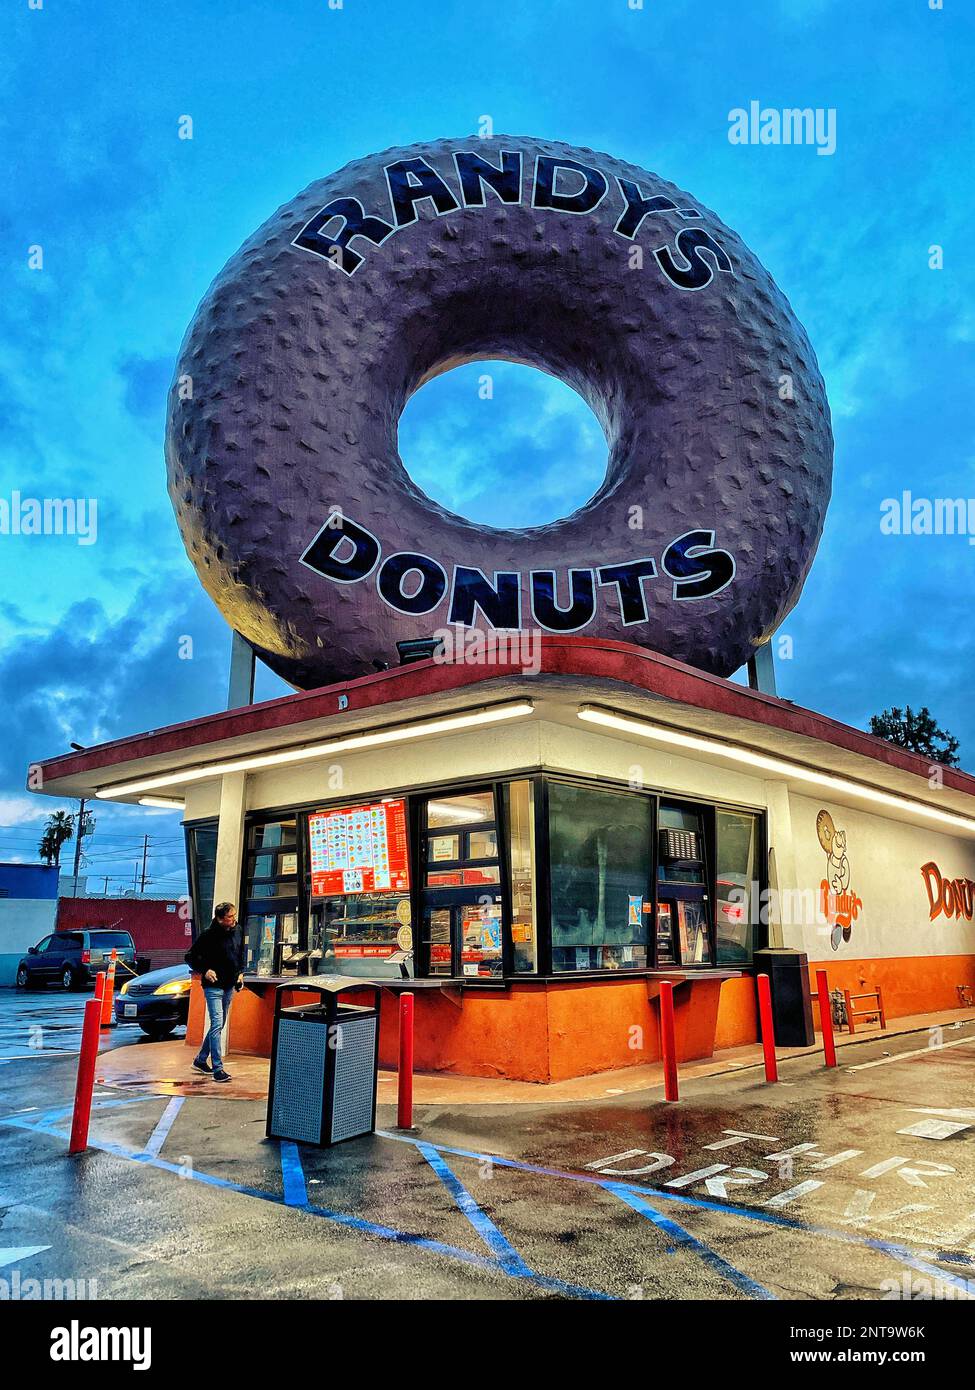 Randy's Donuts, bakery and landmark building in Inglewood, California Stock Photo